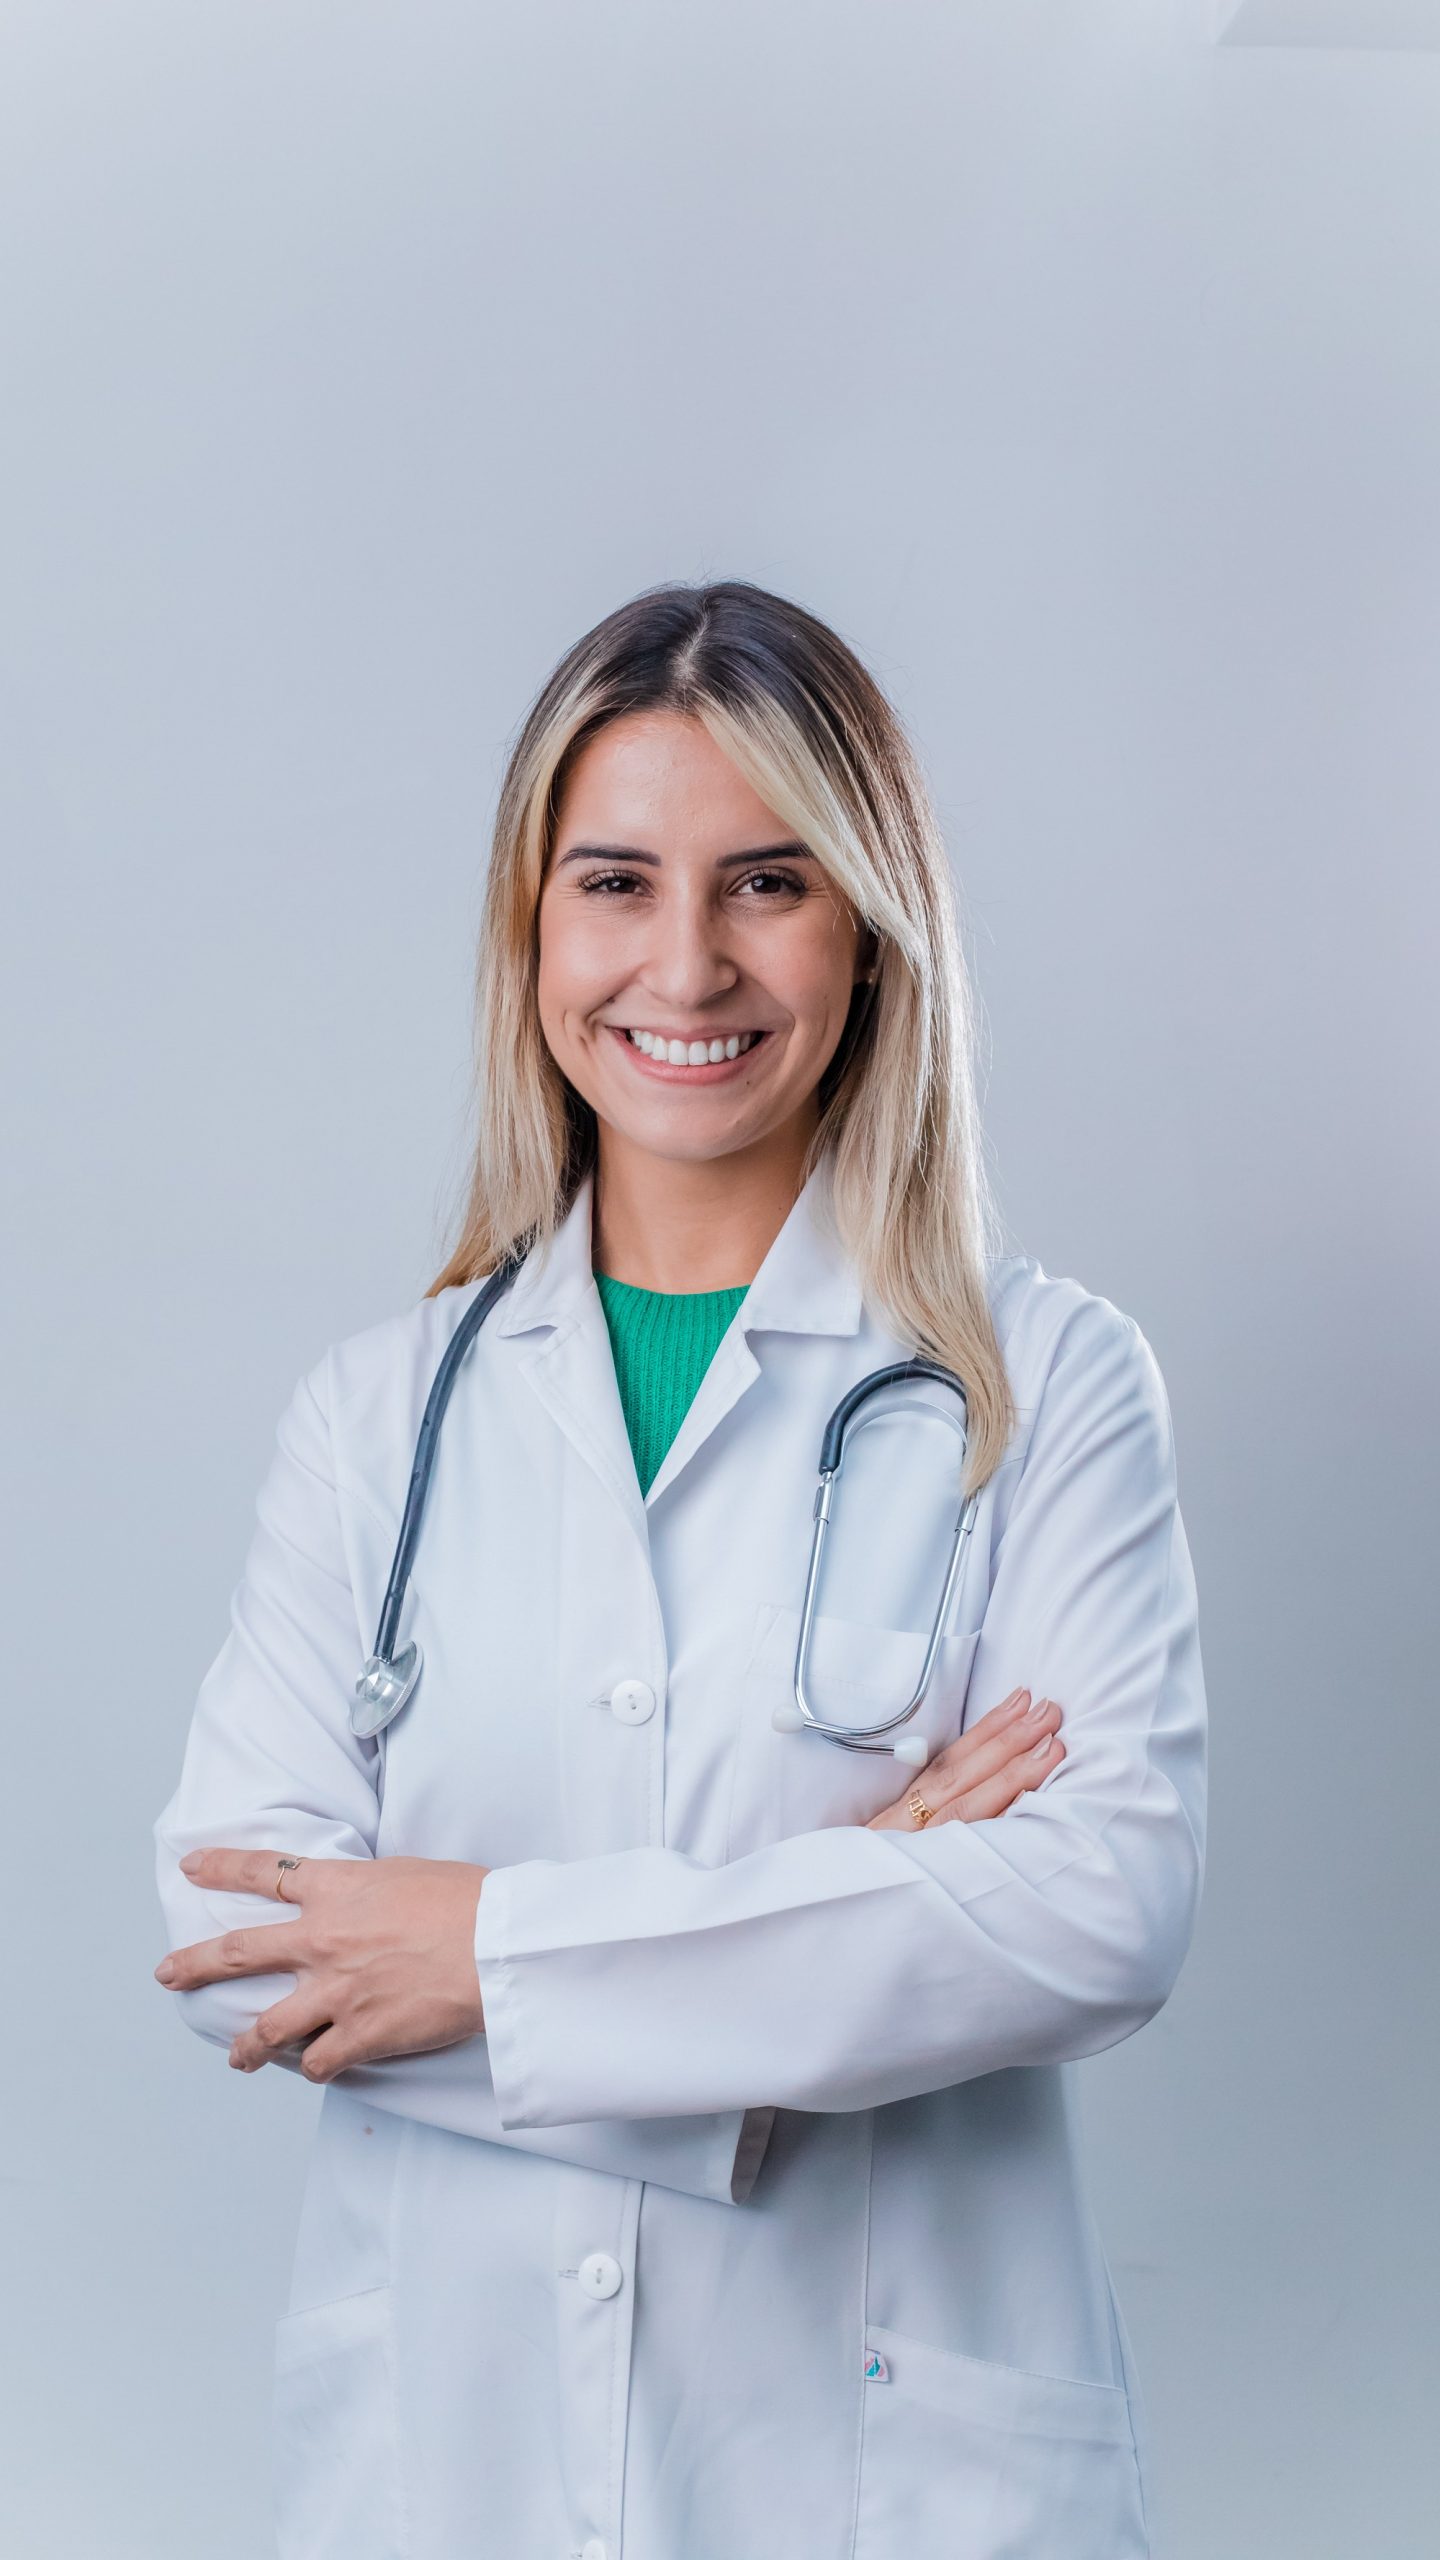 Dra Isabela Oliveira - Veterinária da Petvi